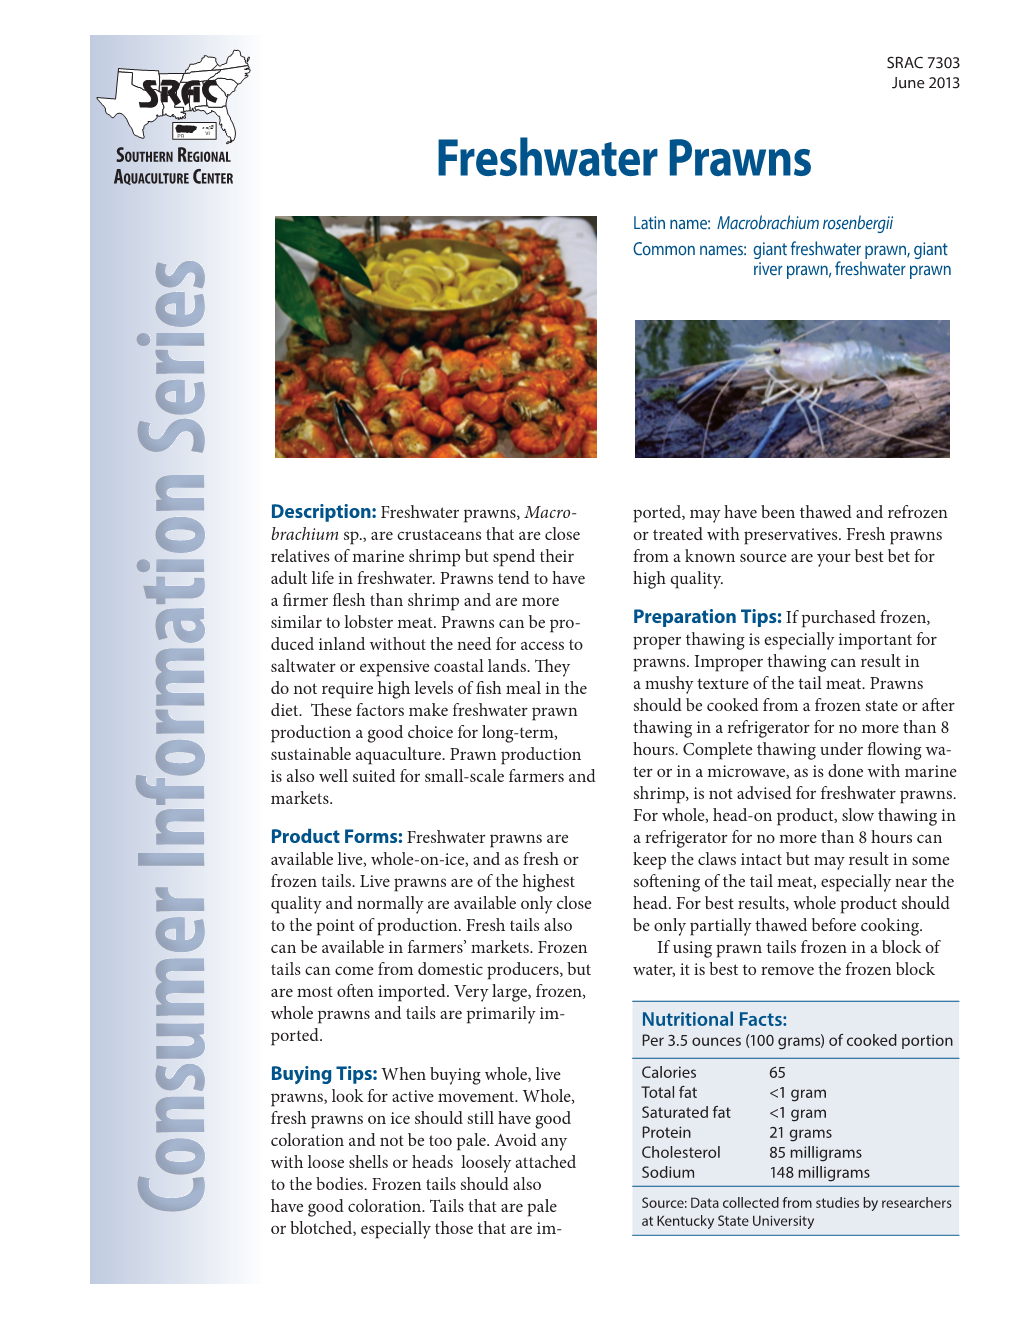 SRAC Publication No. 7303 – Freshwater Prawns